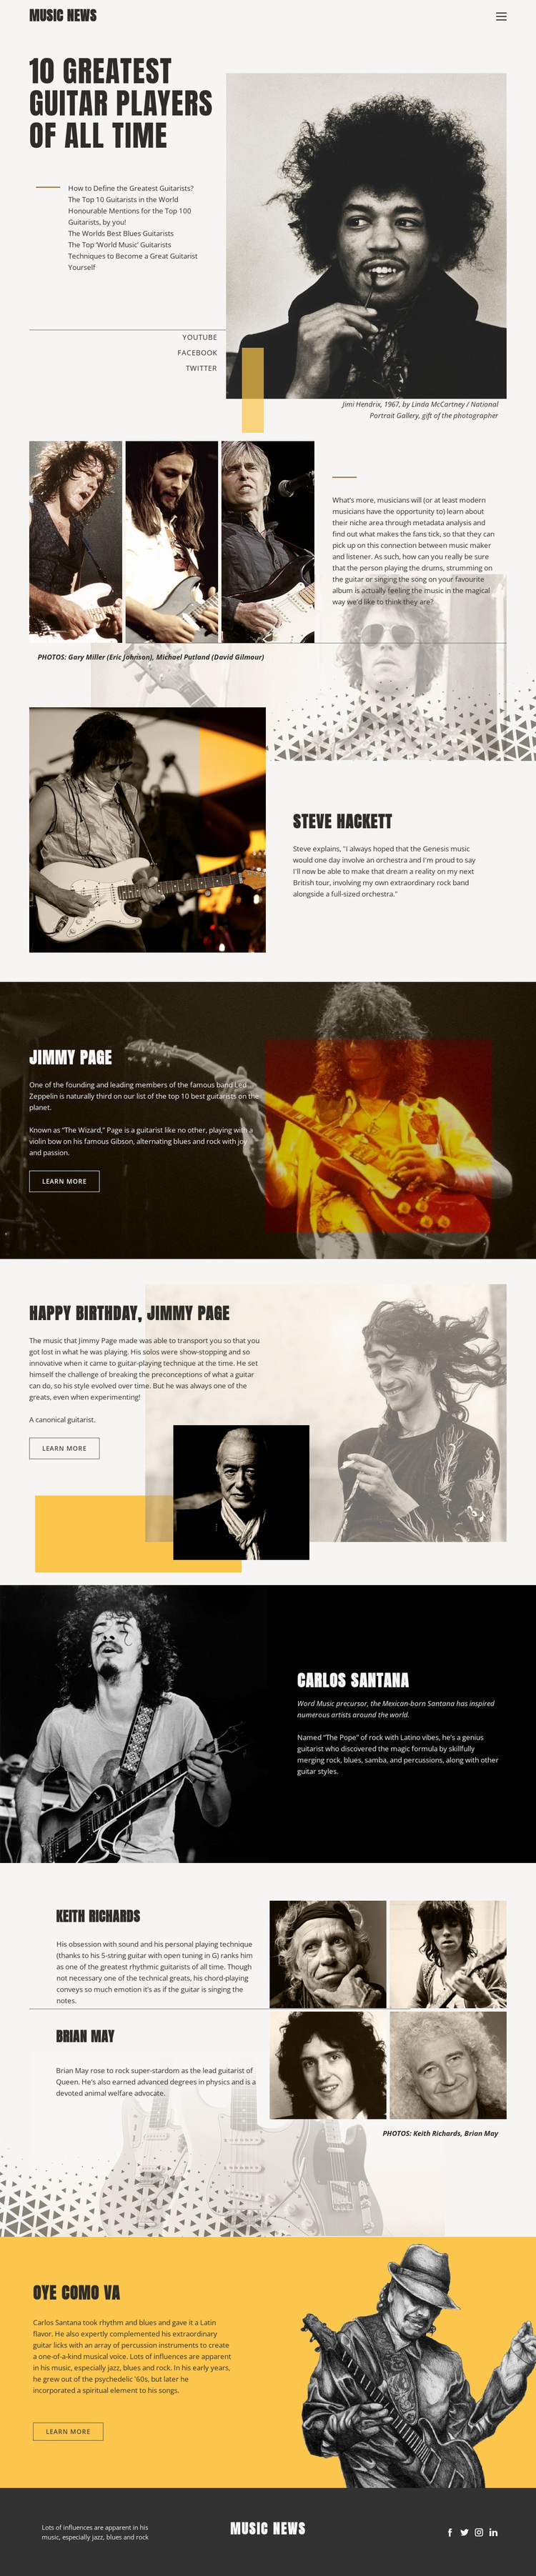 The Top Guitar Players Website Design